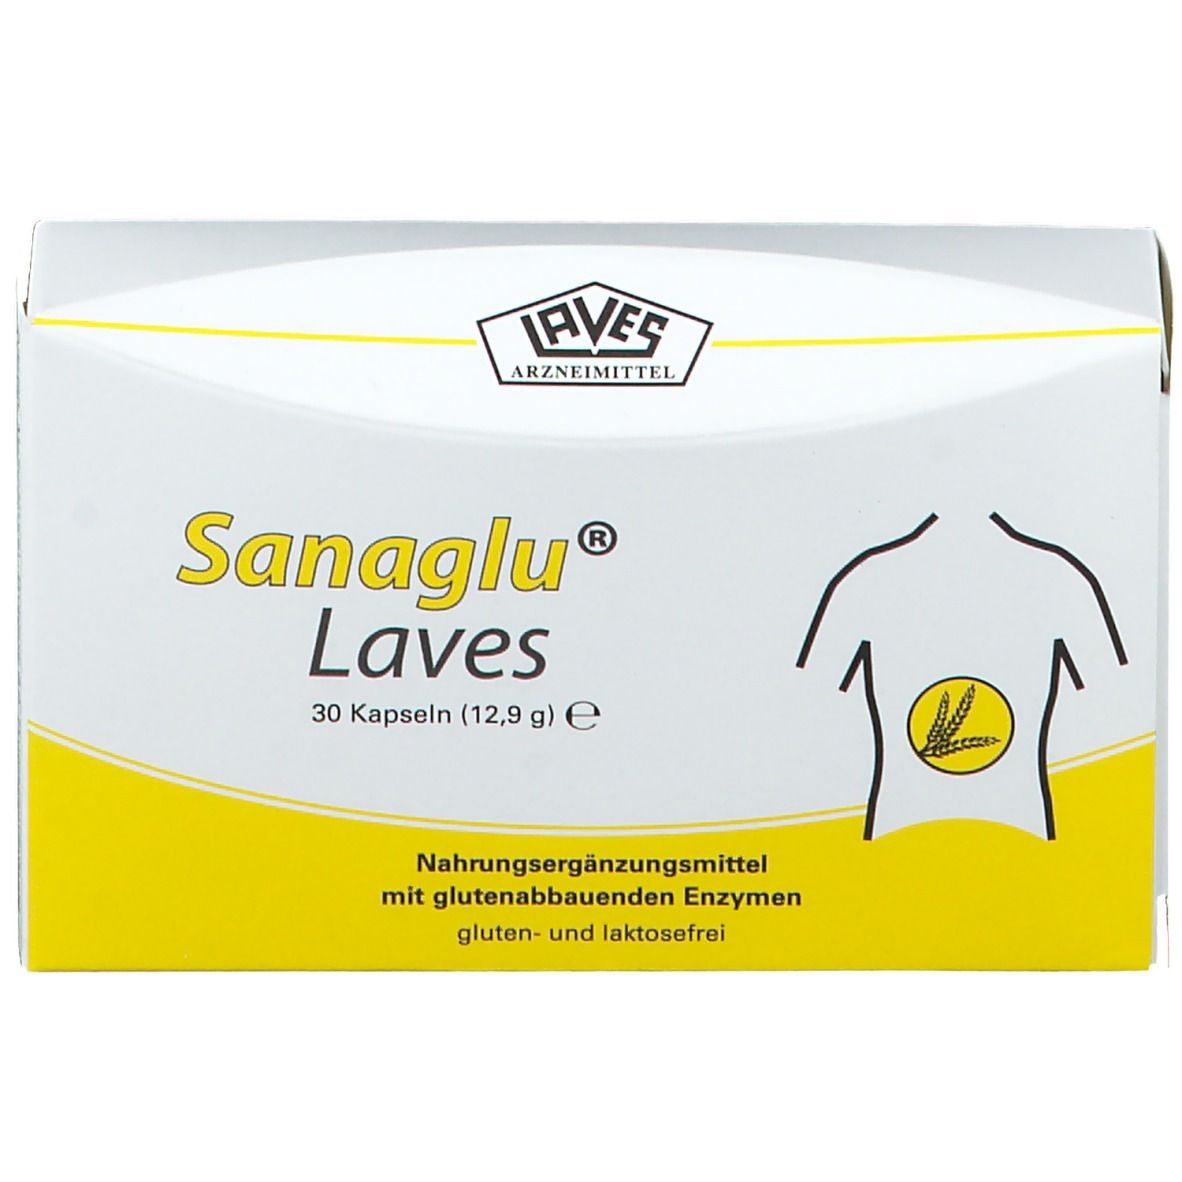 Sanaglu® Laves